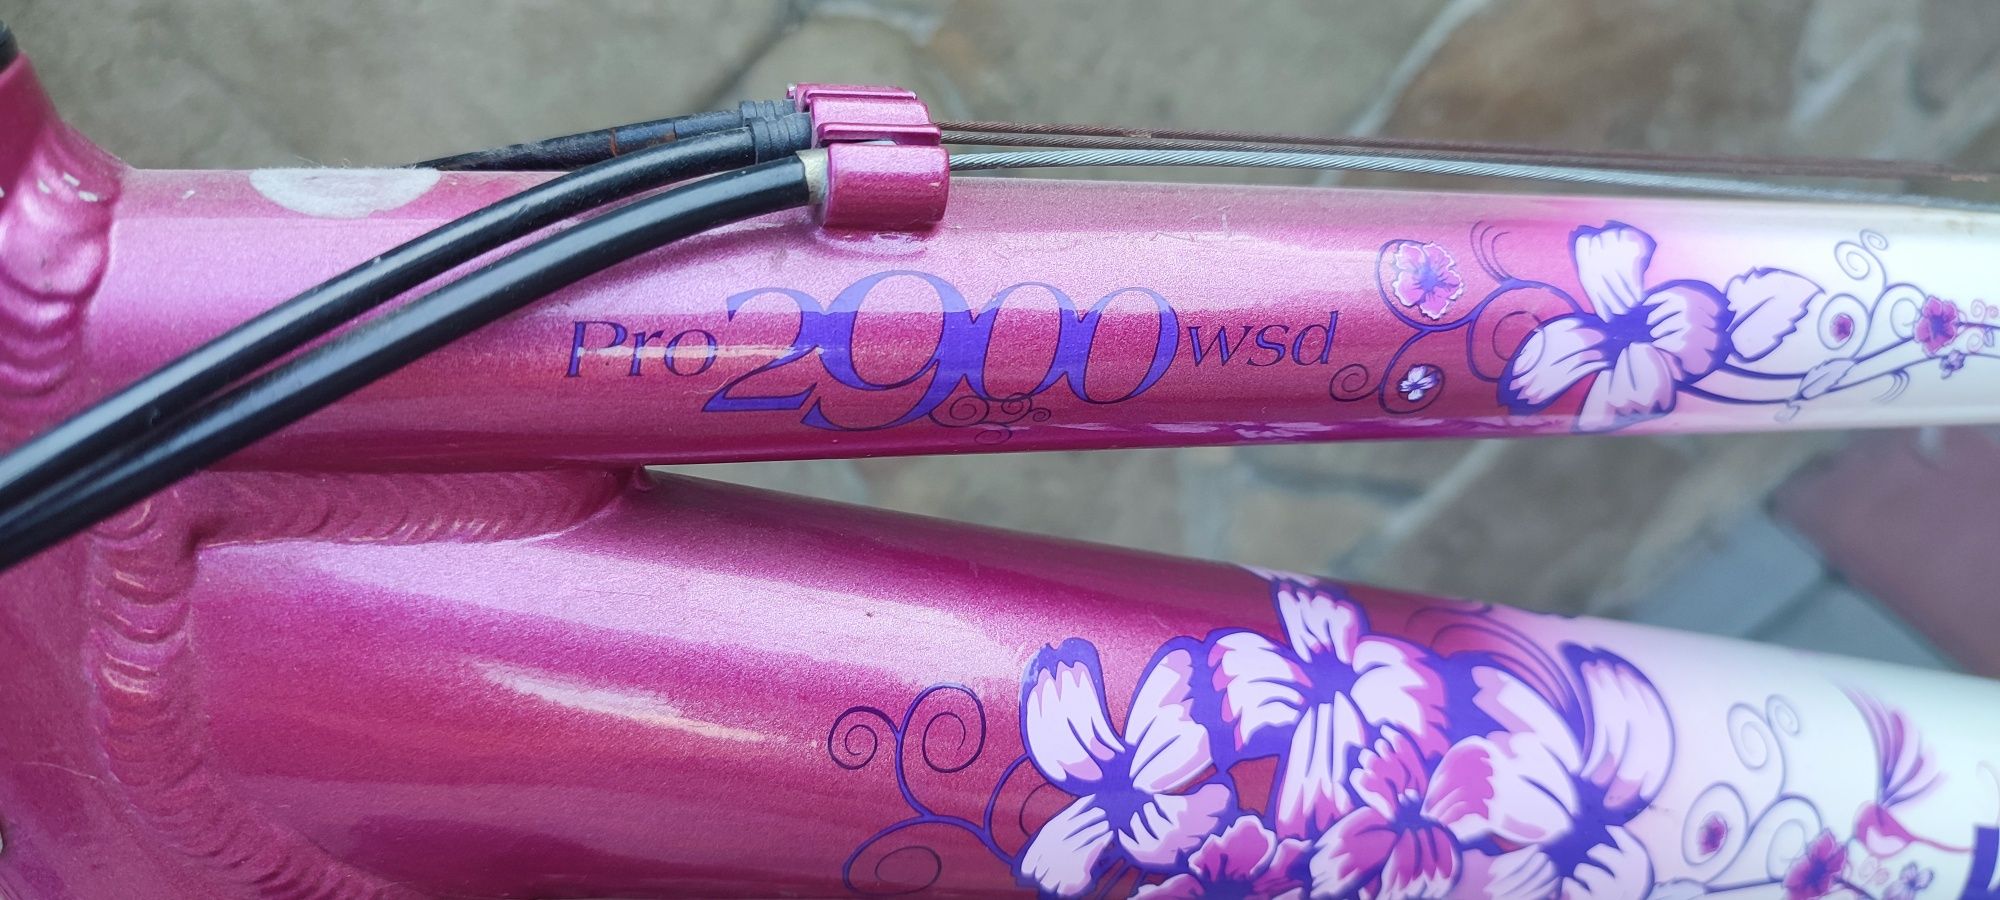 женский велосипед Wheeler Pro 2900 wsd